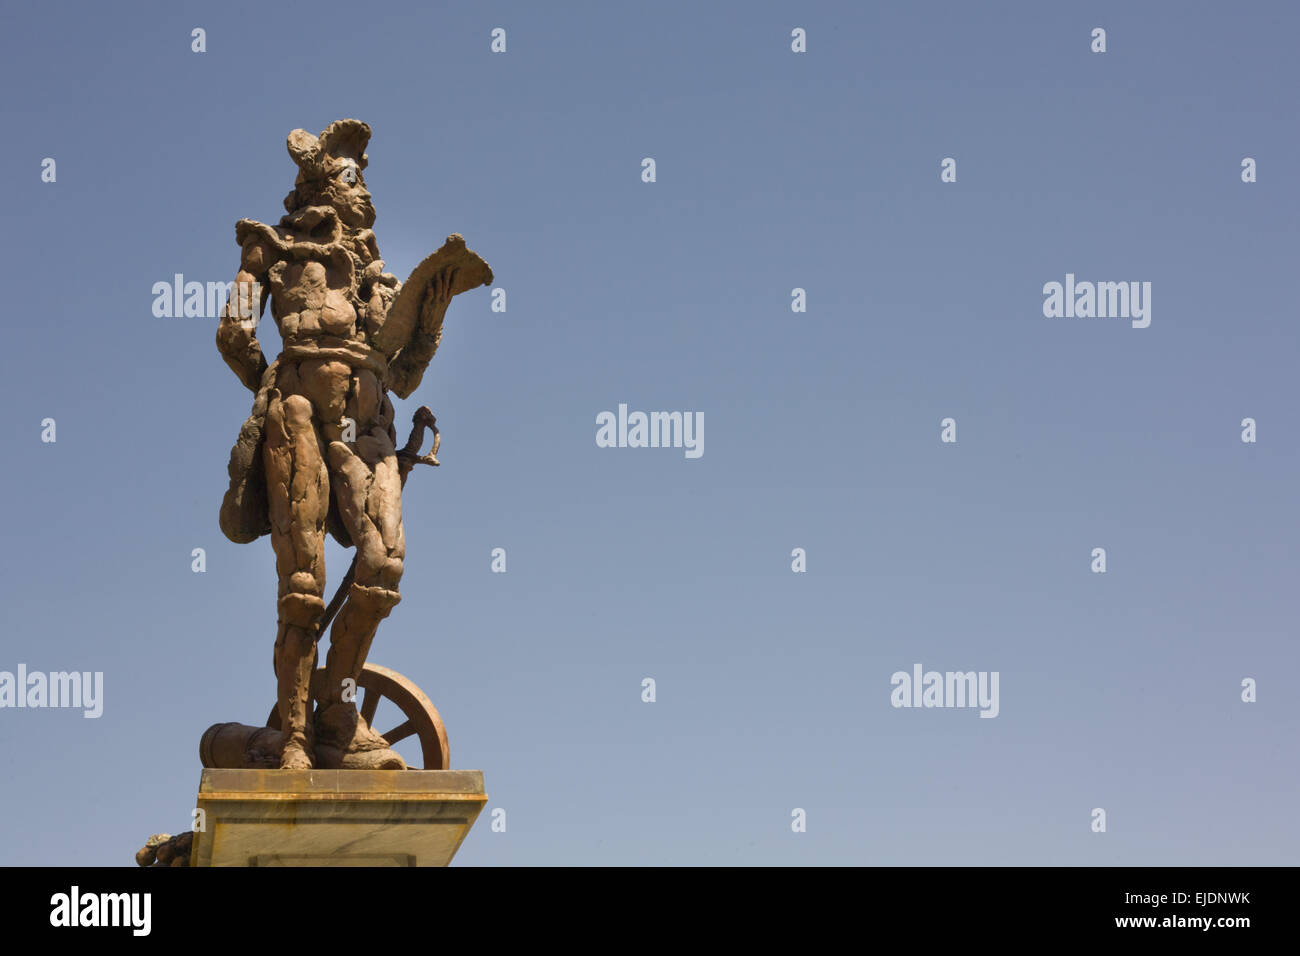 Statue of Godoy, historic relevant character at Spanish Revolutionary War, Badajoz, Spain Stock Photo